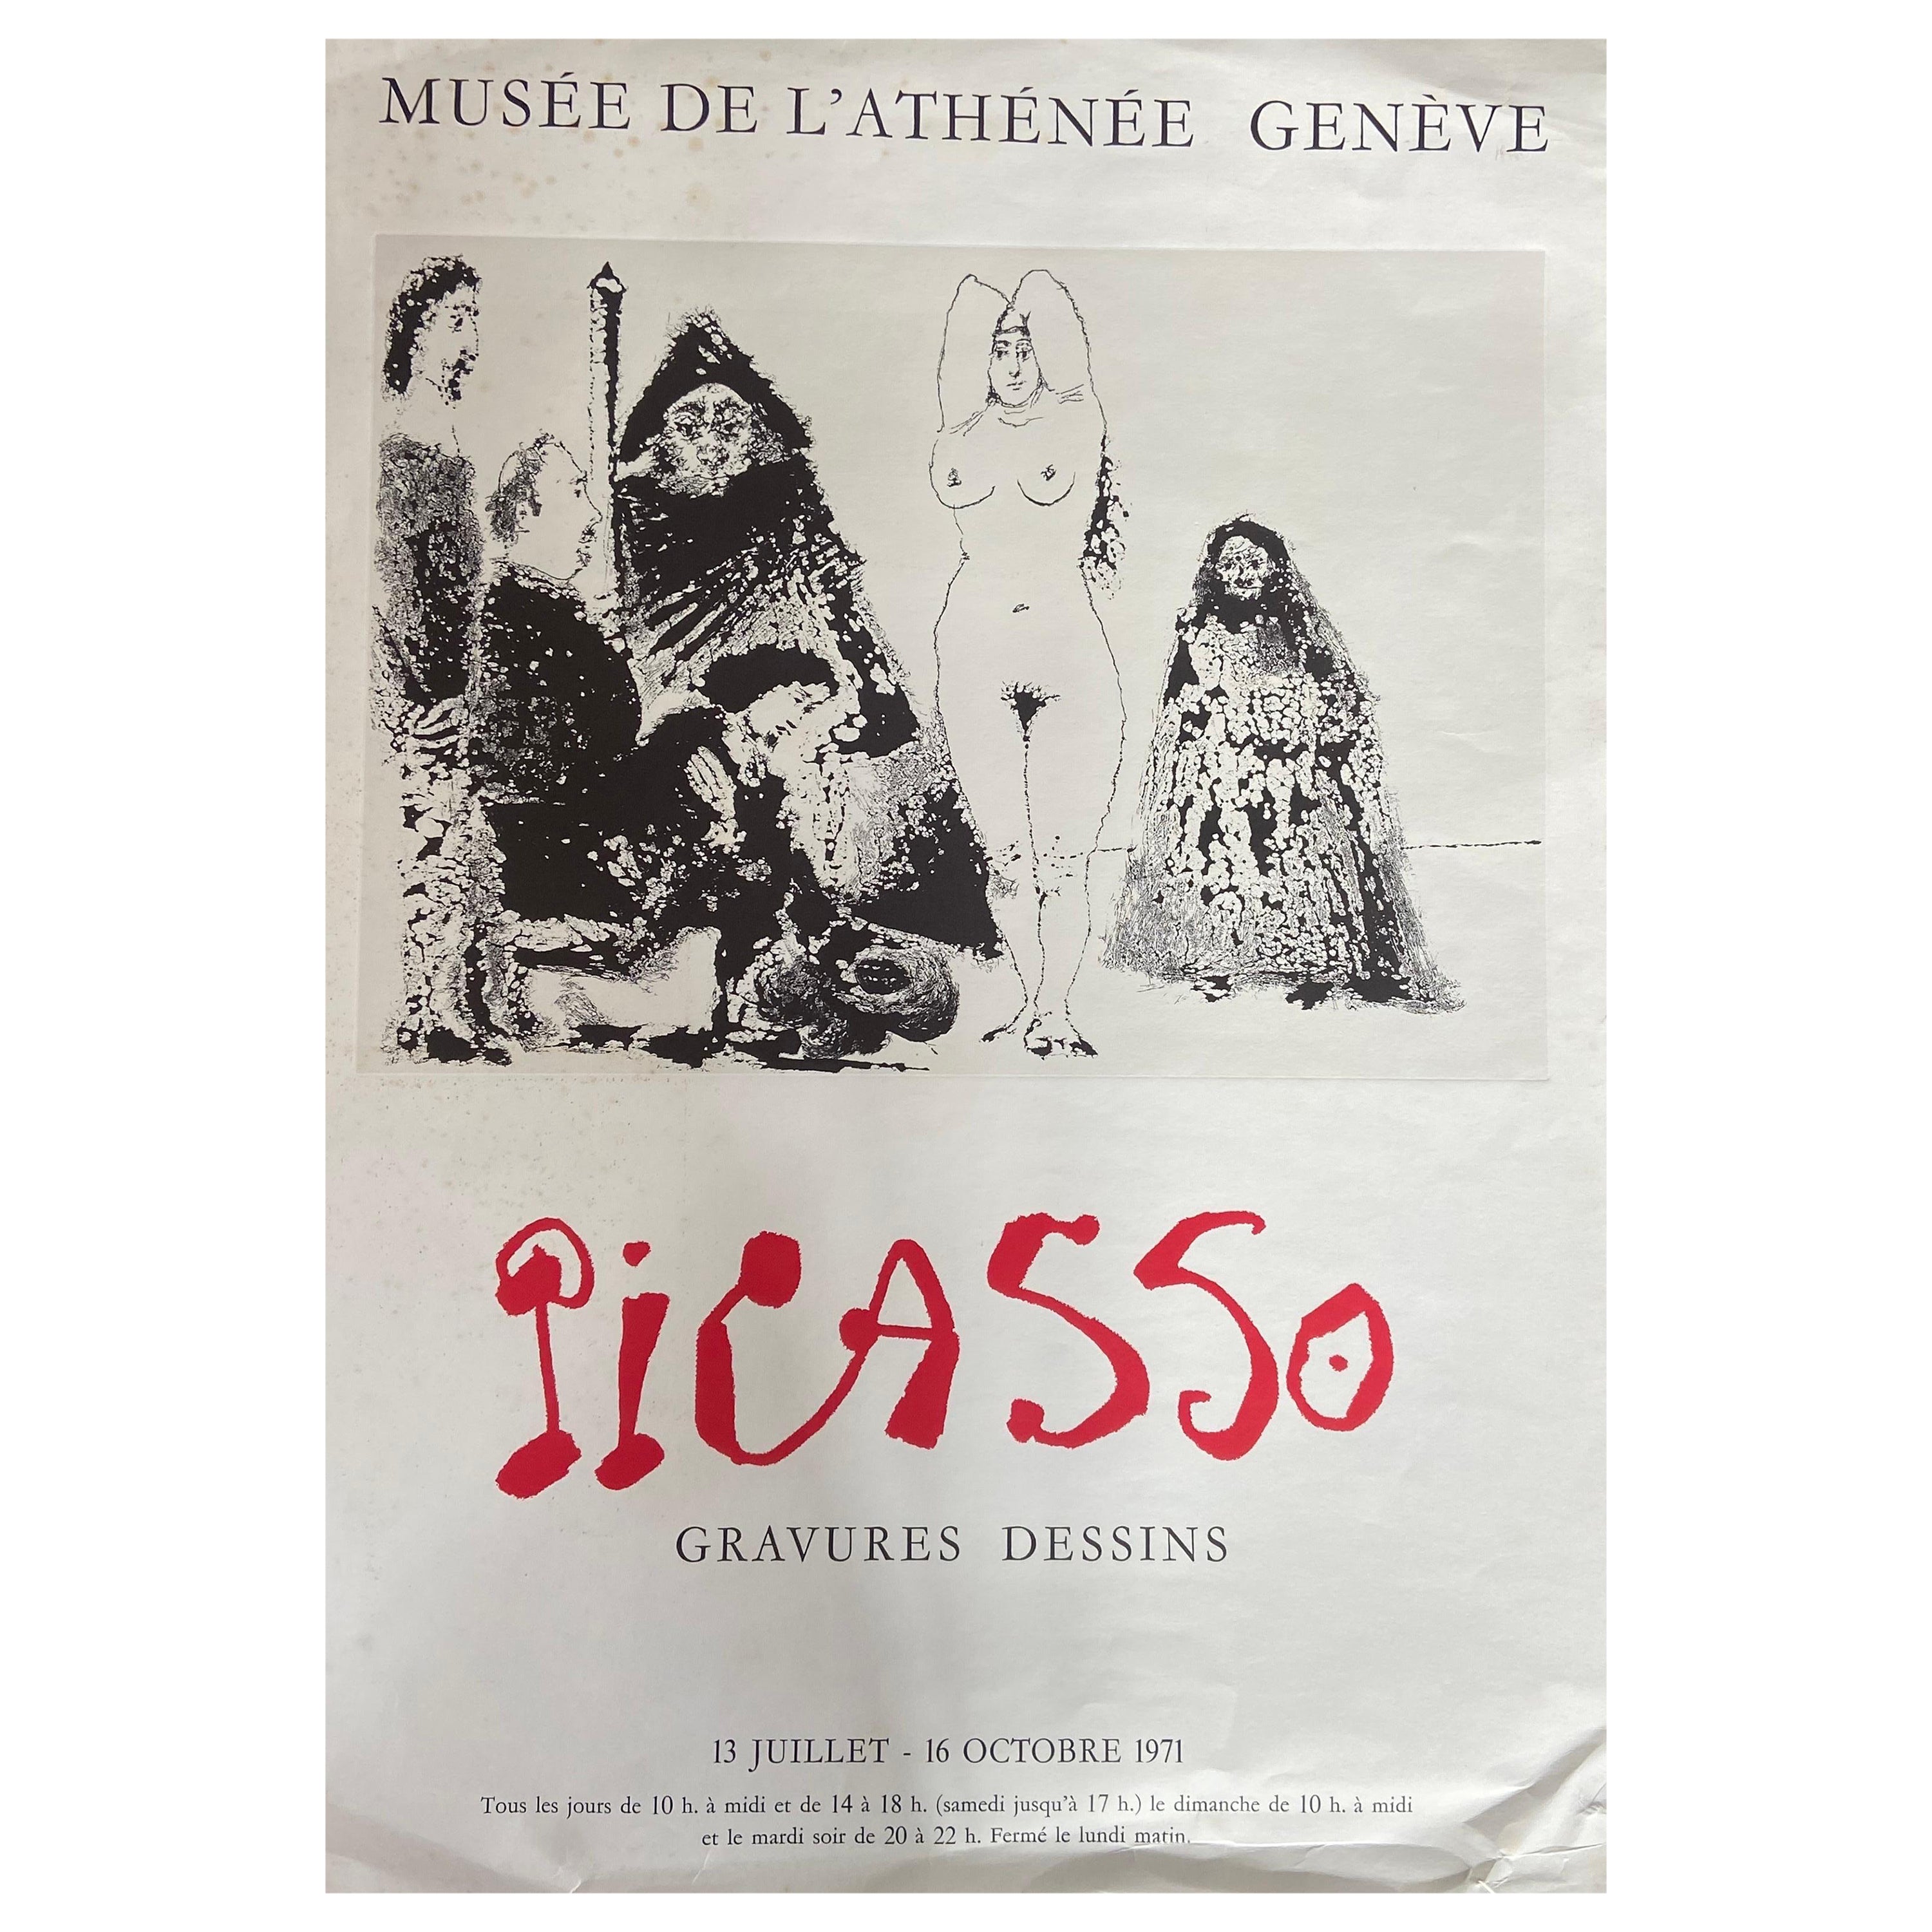 Original Poster for Picasso Exhibition in Geneva back in 1971